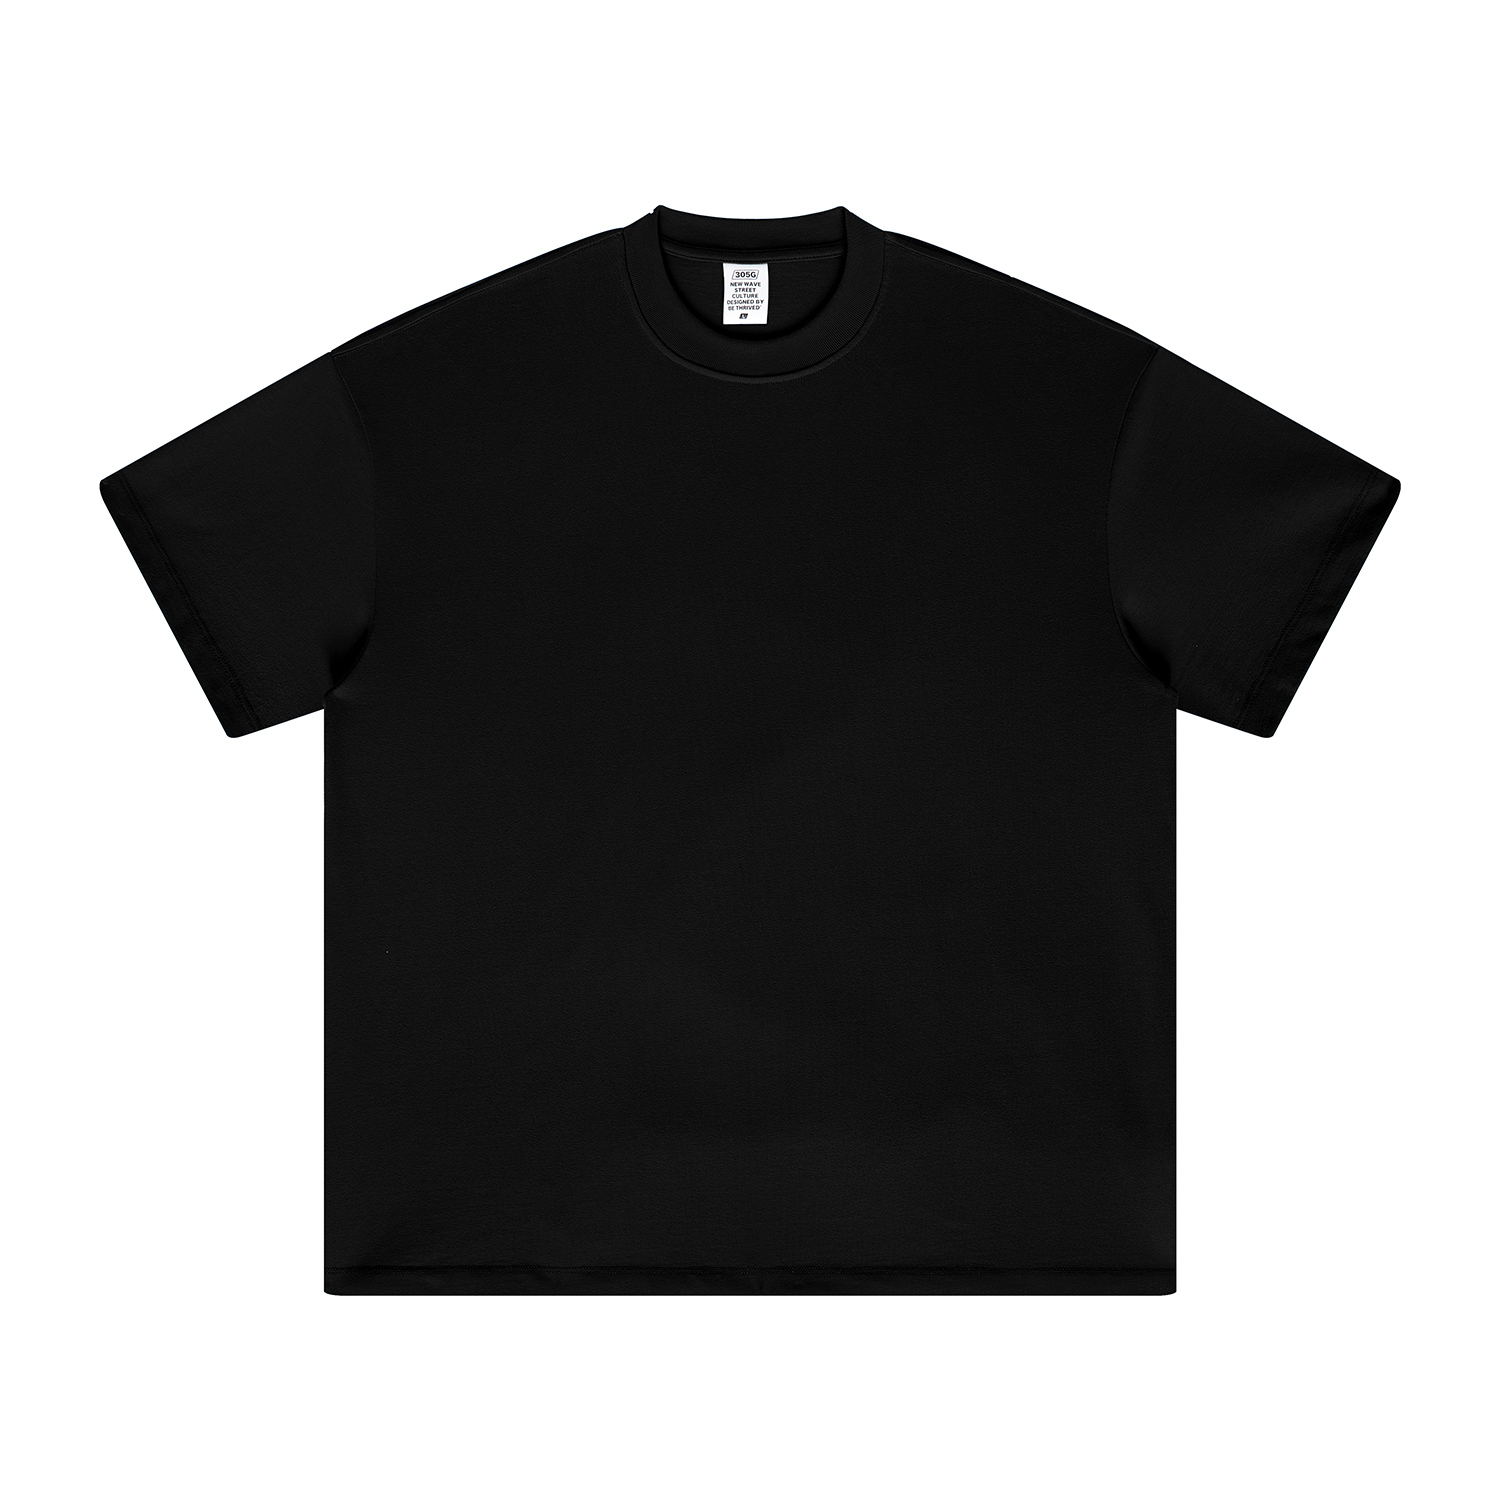 Streetwear Unisex Basic Earth Tone 100% Cotton T-Shirt - Print On Demand | HugePOD-35